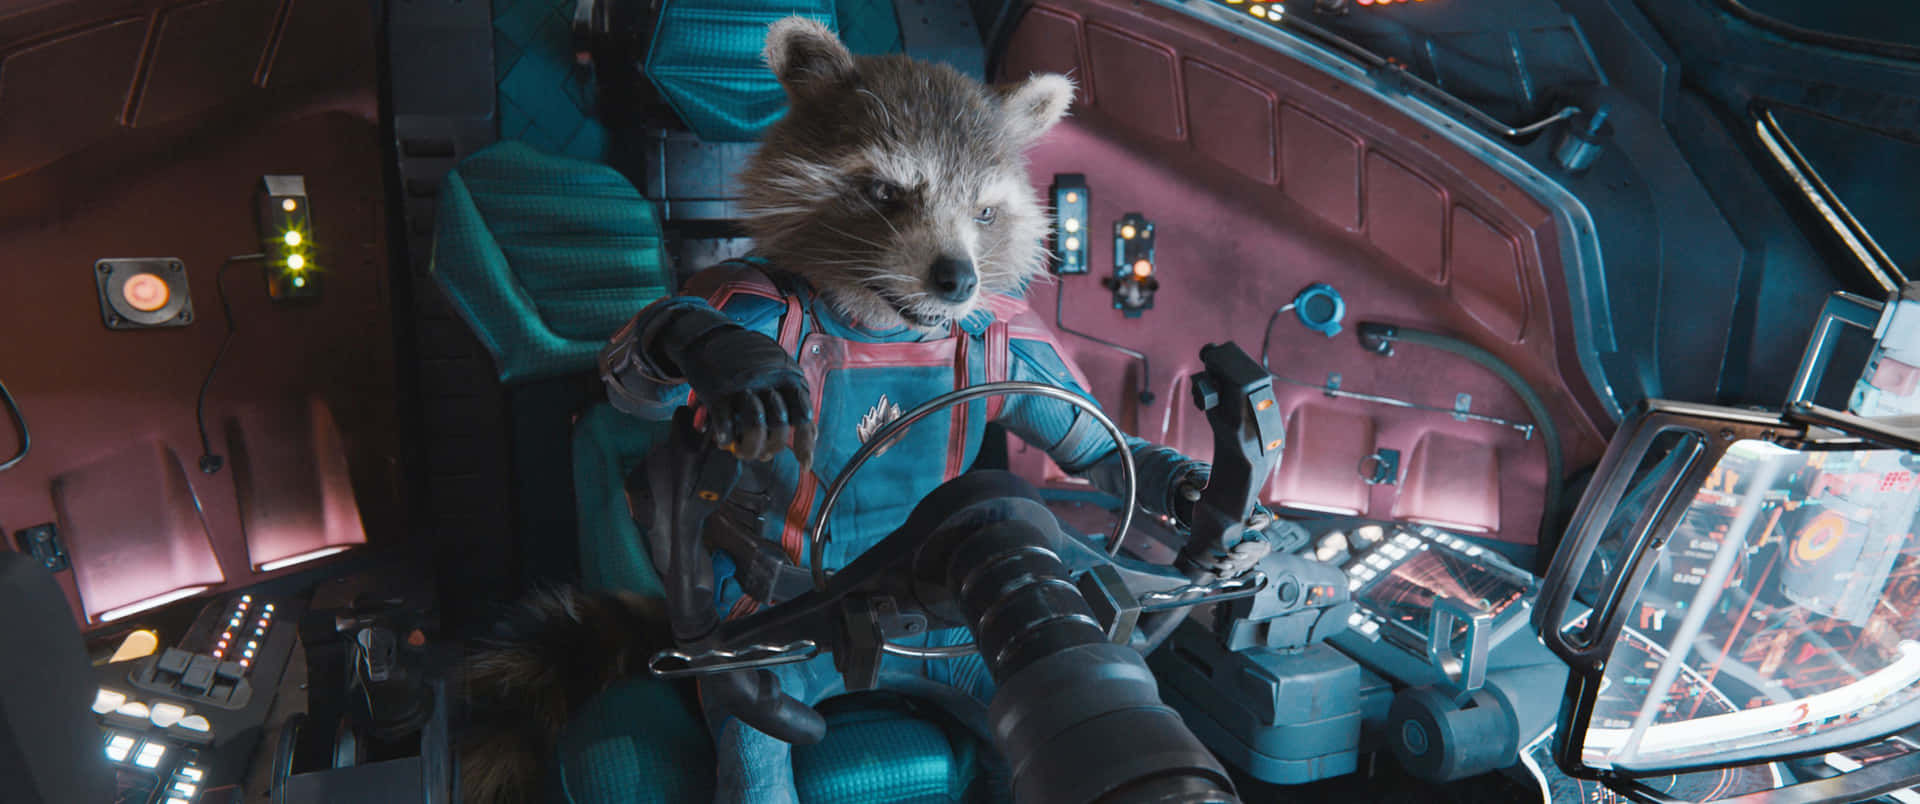 Guardians Galaxy Raccoon Piloting Spaceship Wallpaper